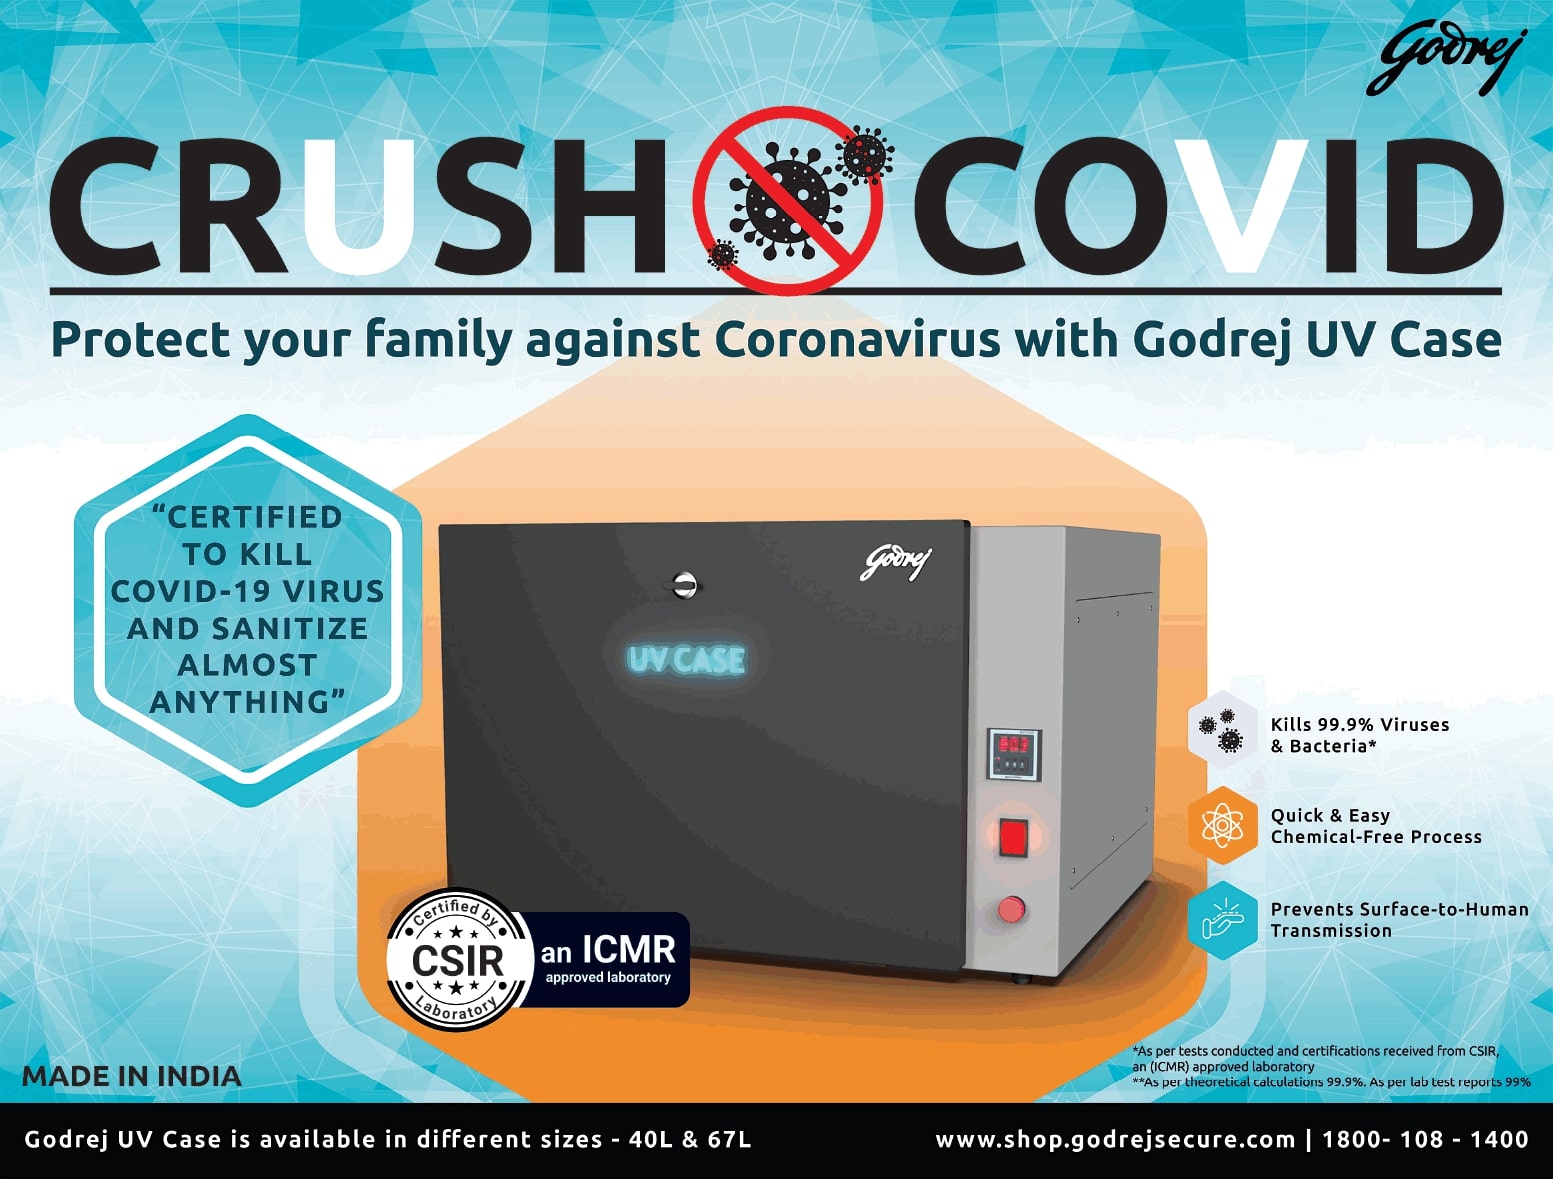 godrej-crush-covid-protect-your-family-against-coronavirus-with-godrej-uv-case-ad-delhi-times-02-05-2021